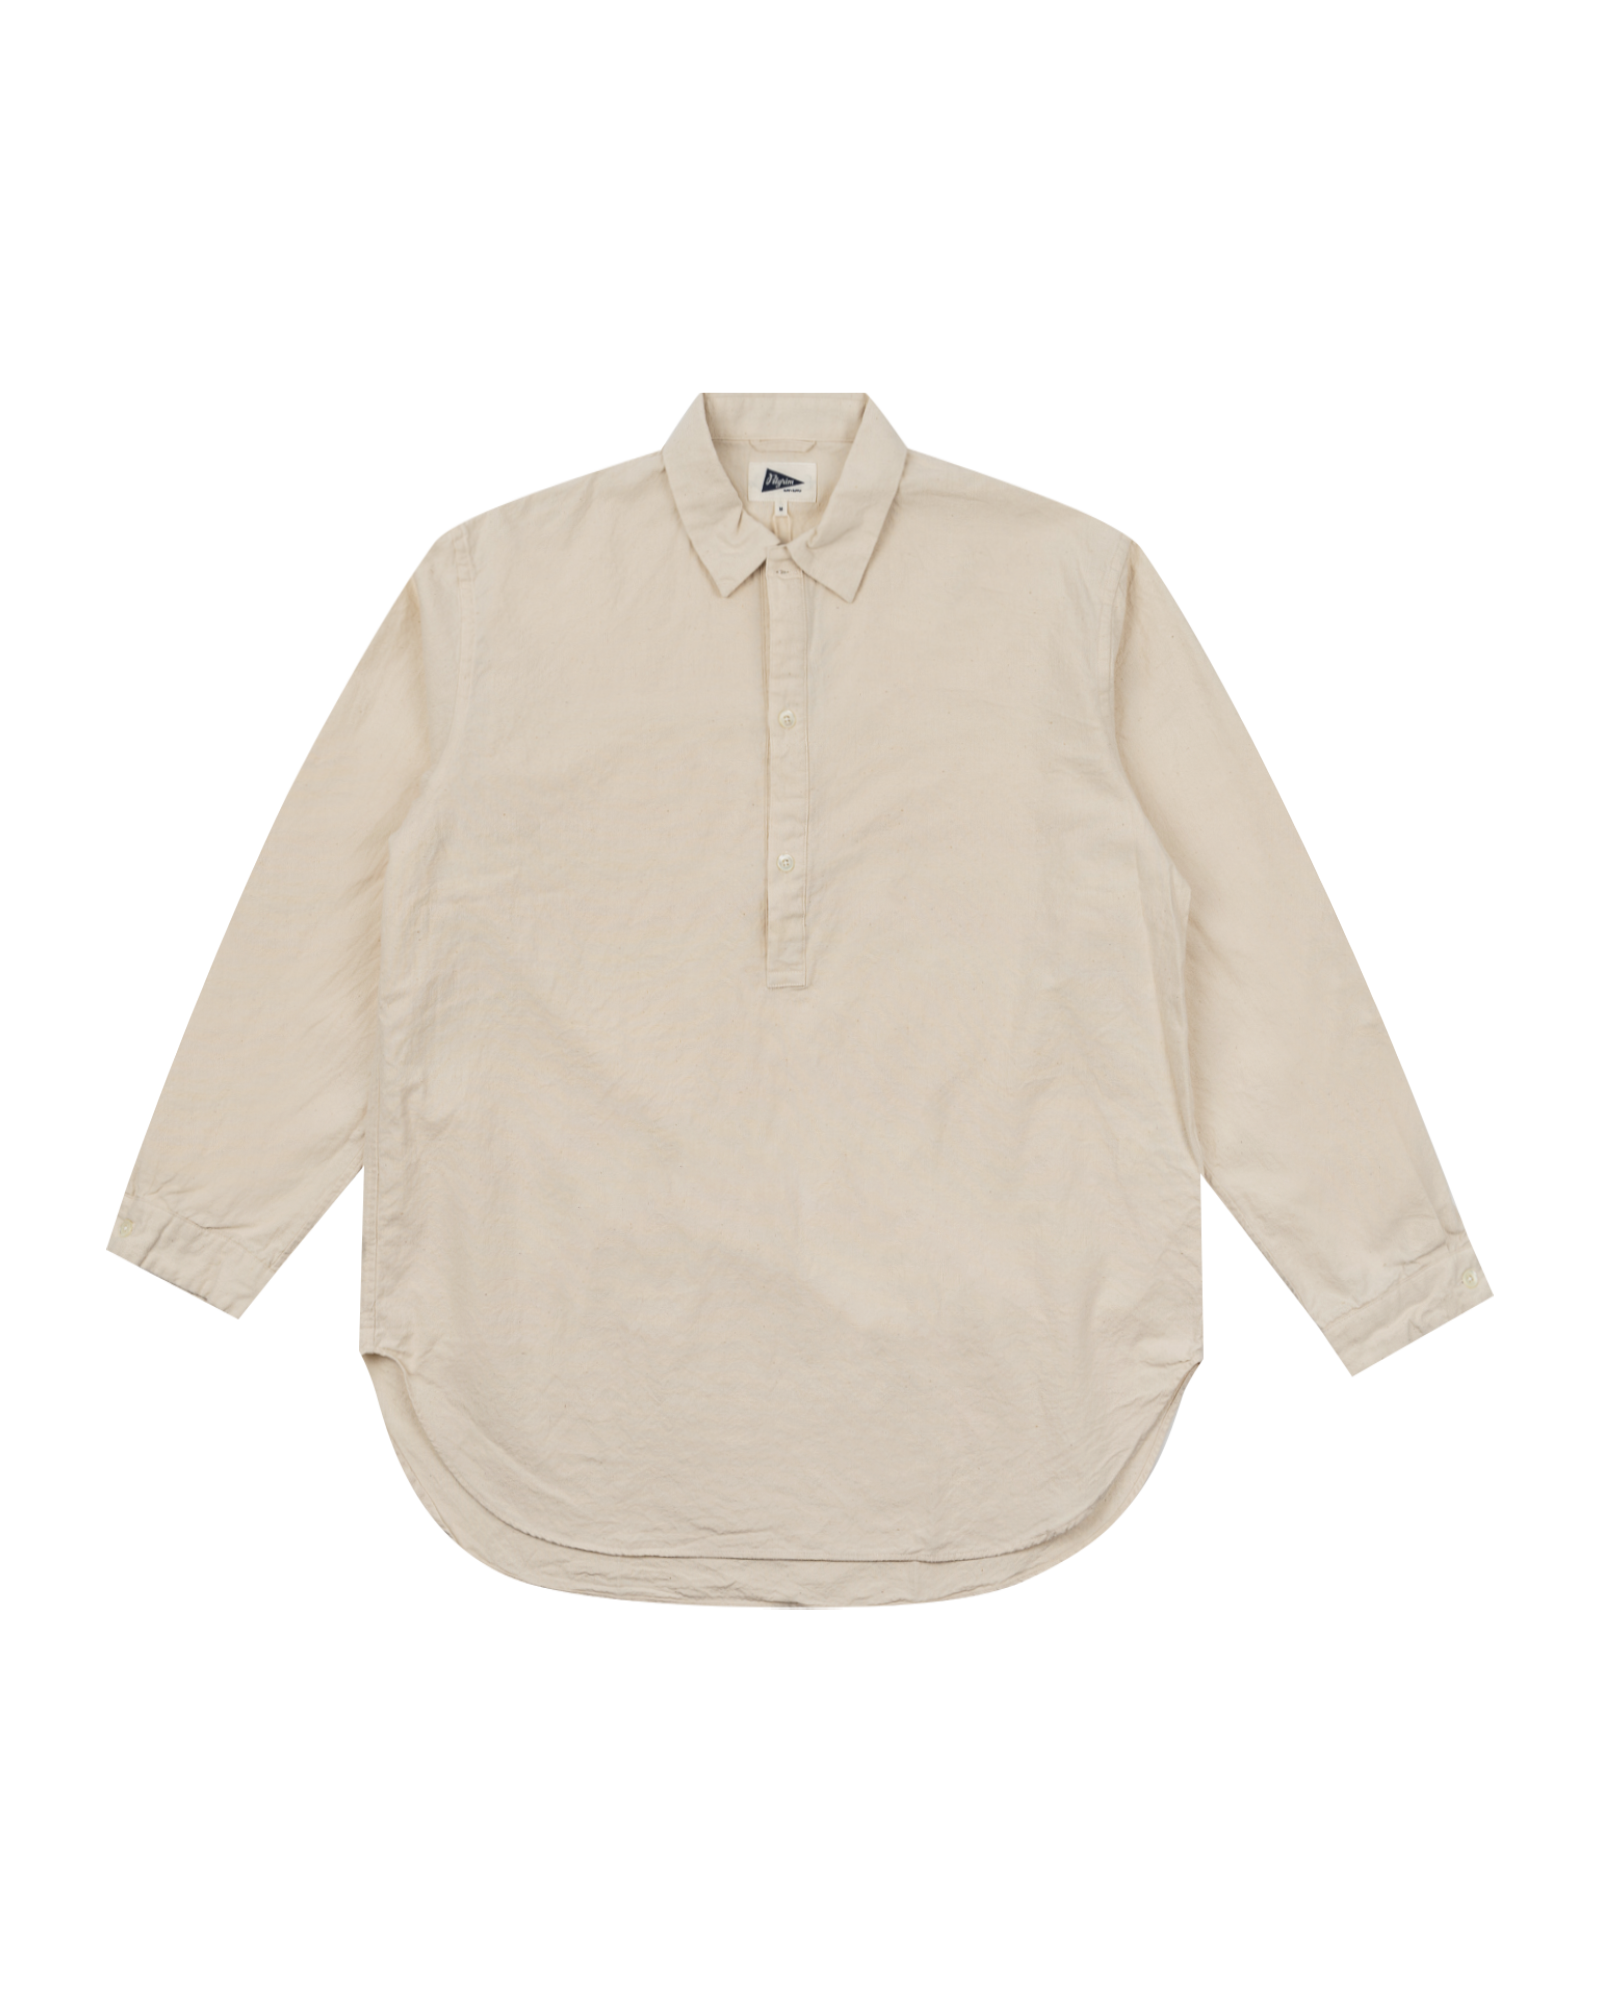 Pilgrim Surf + Supply - Shirt - McCarthy - Popover Shirt - Natural